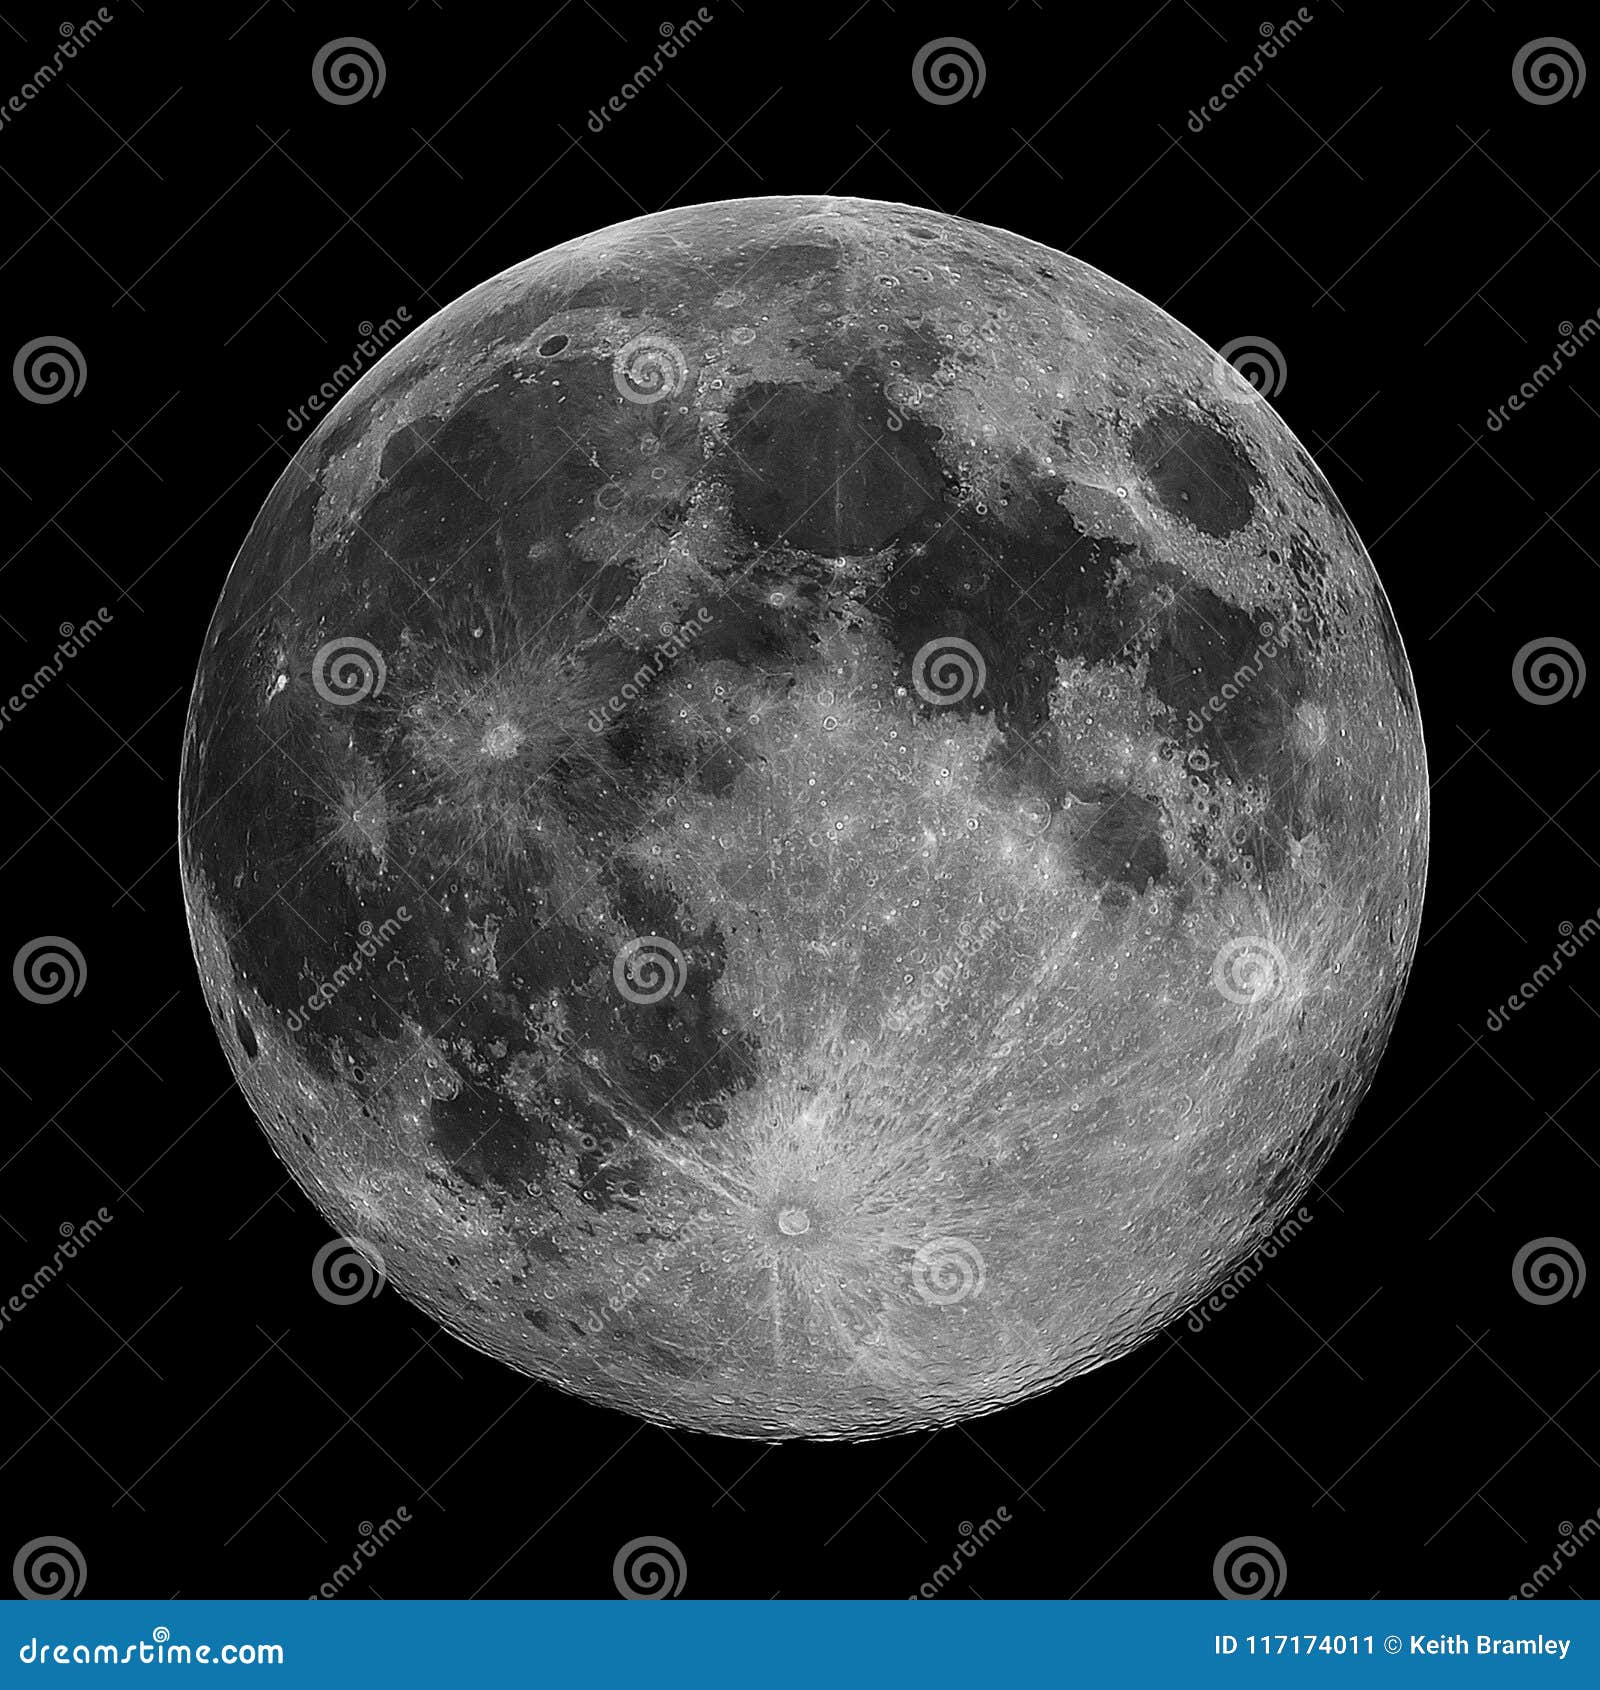 full moon taken using a 190mn telescope